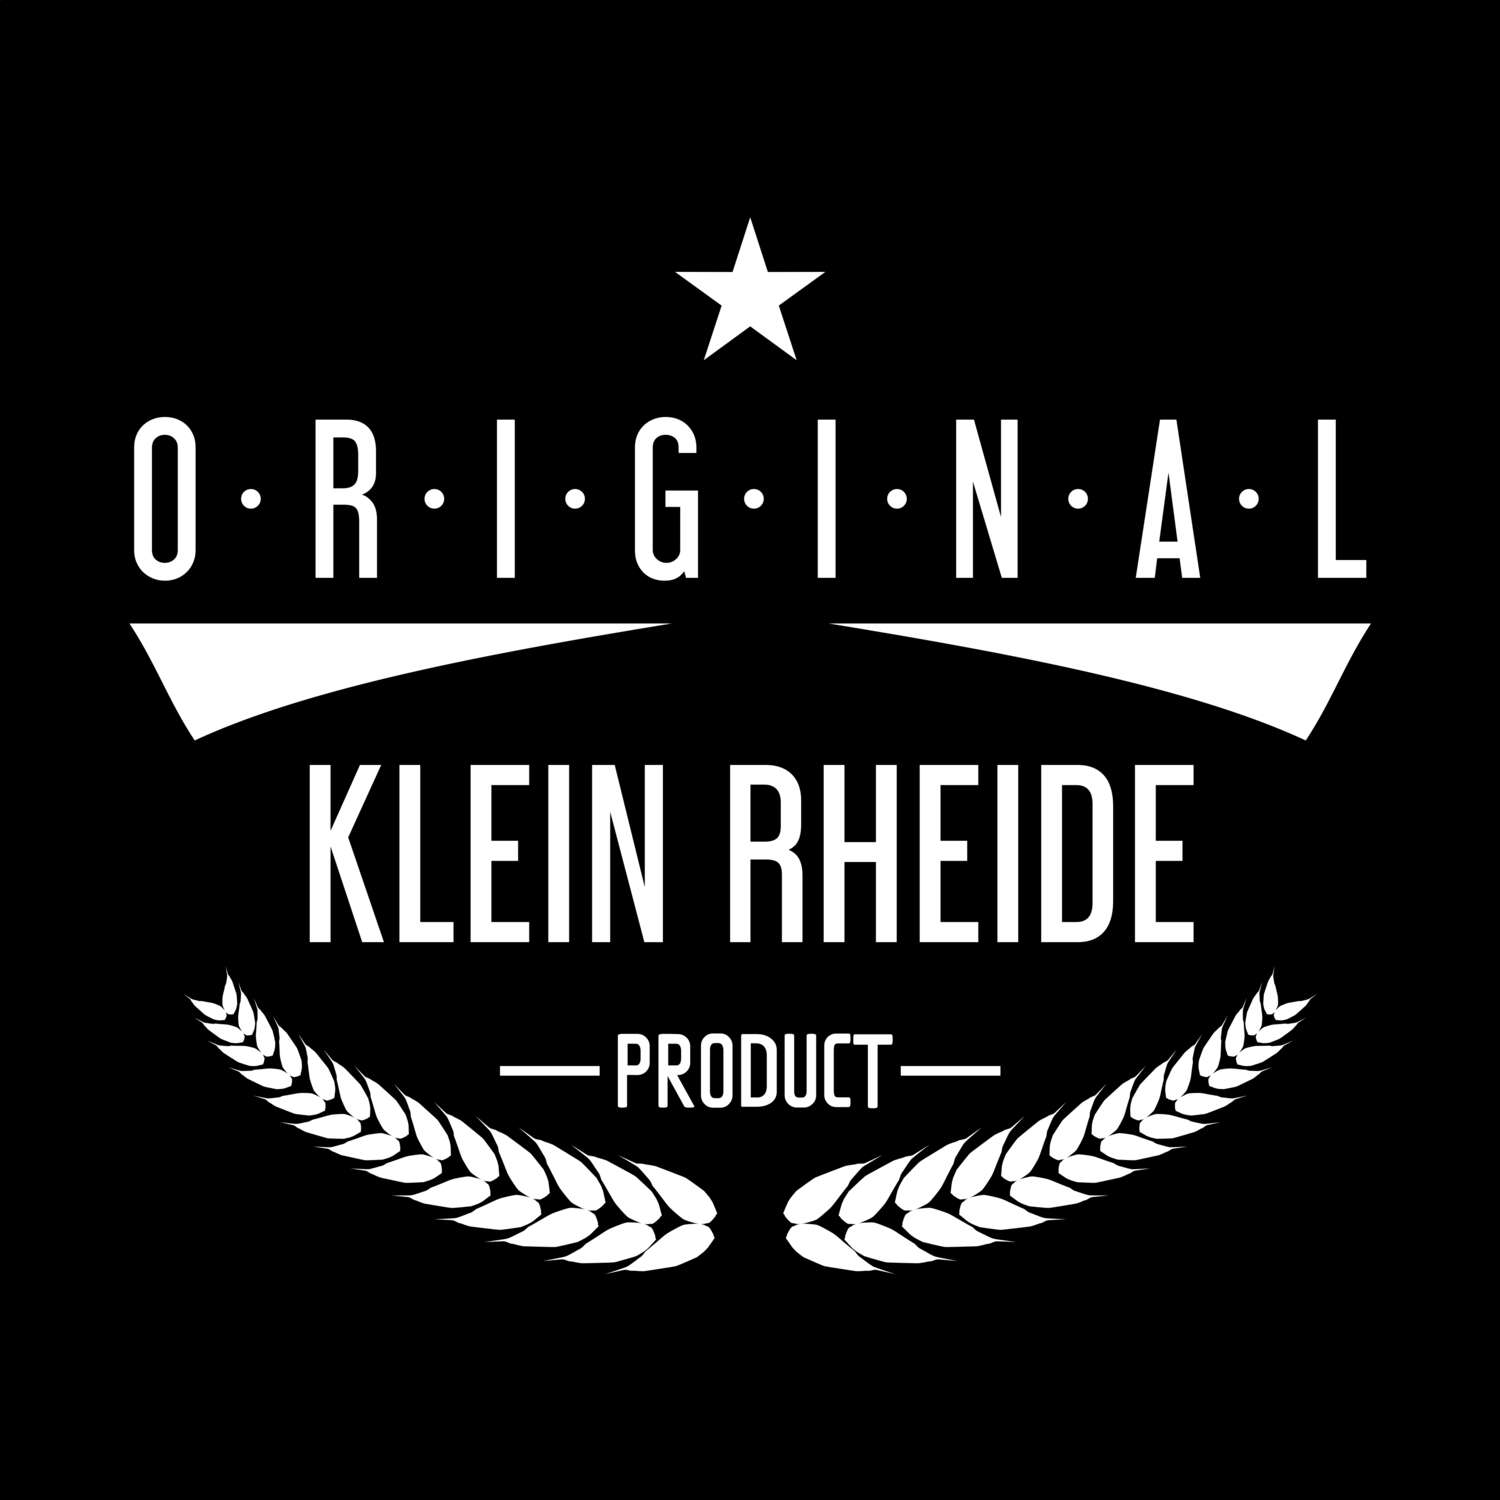 Klein Rheide T-Shirt »Original Product«